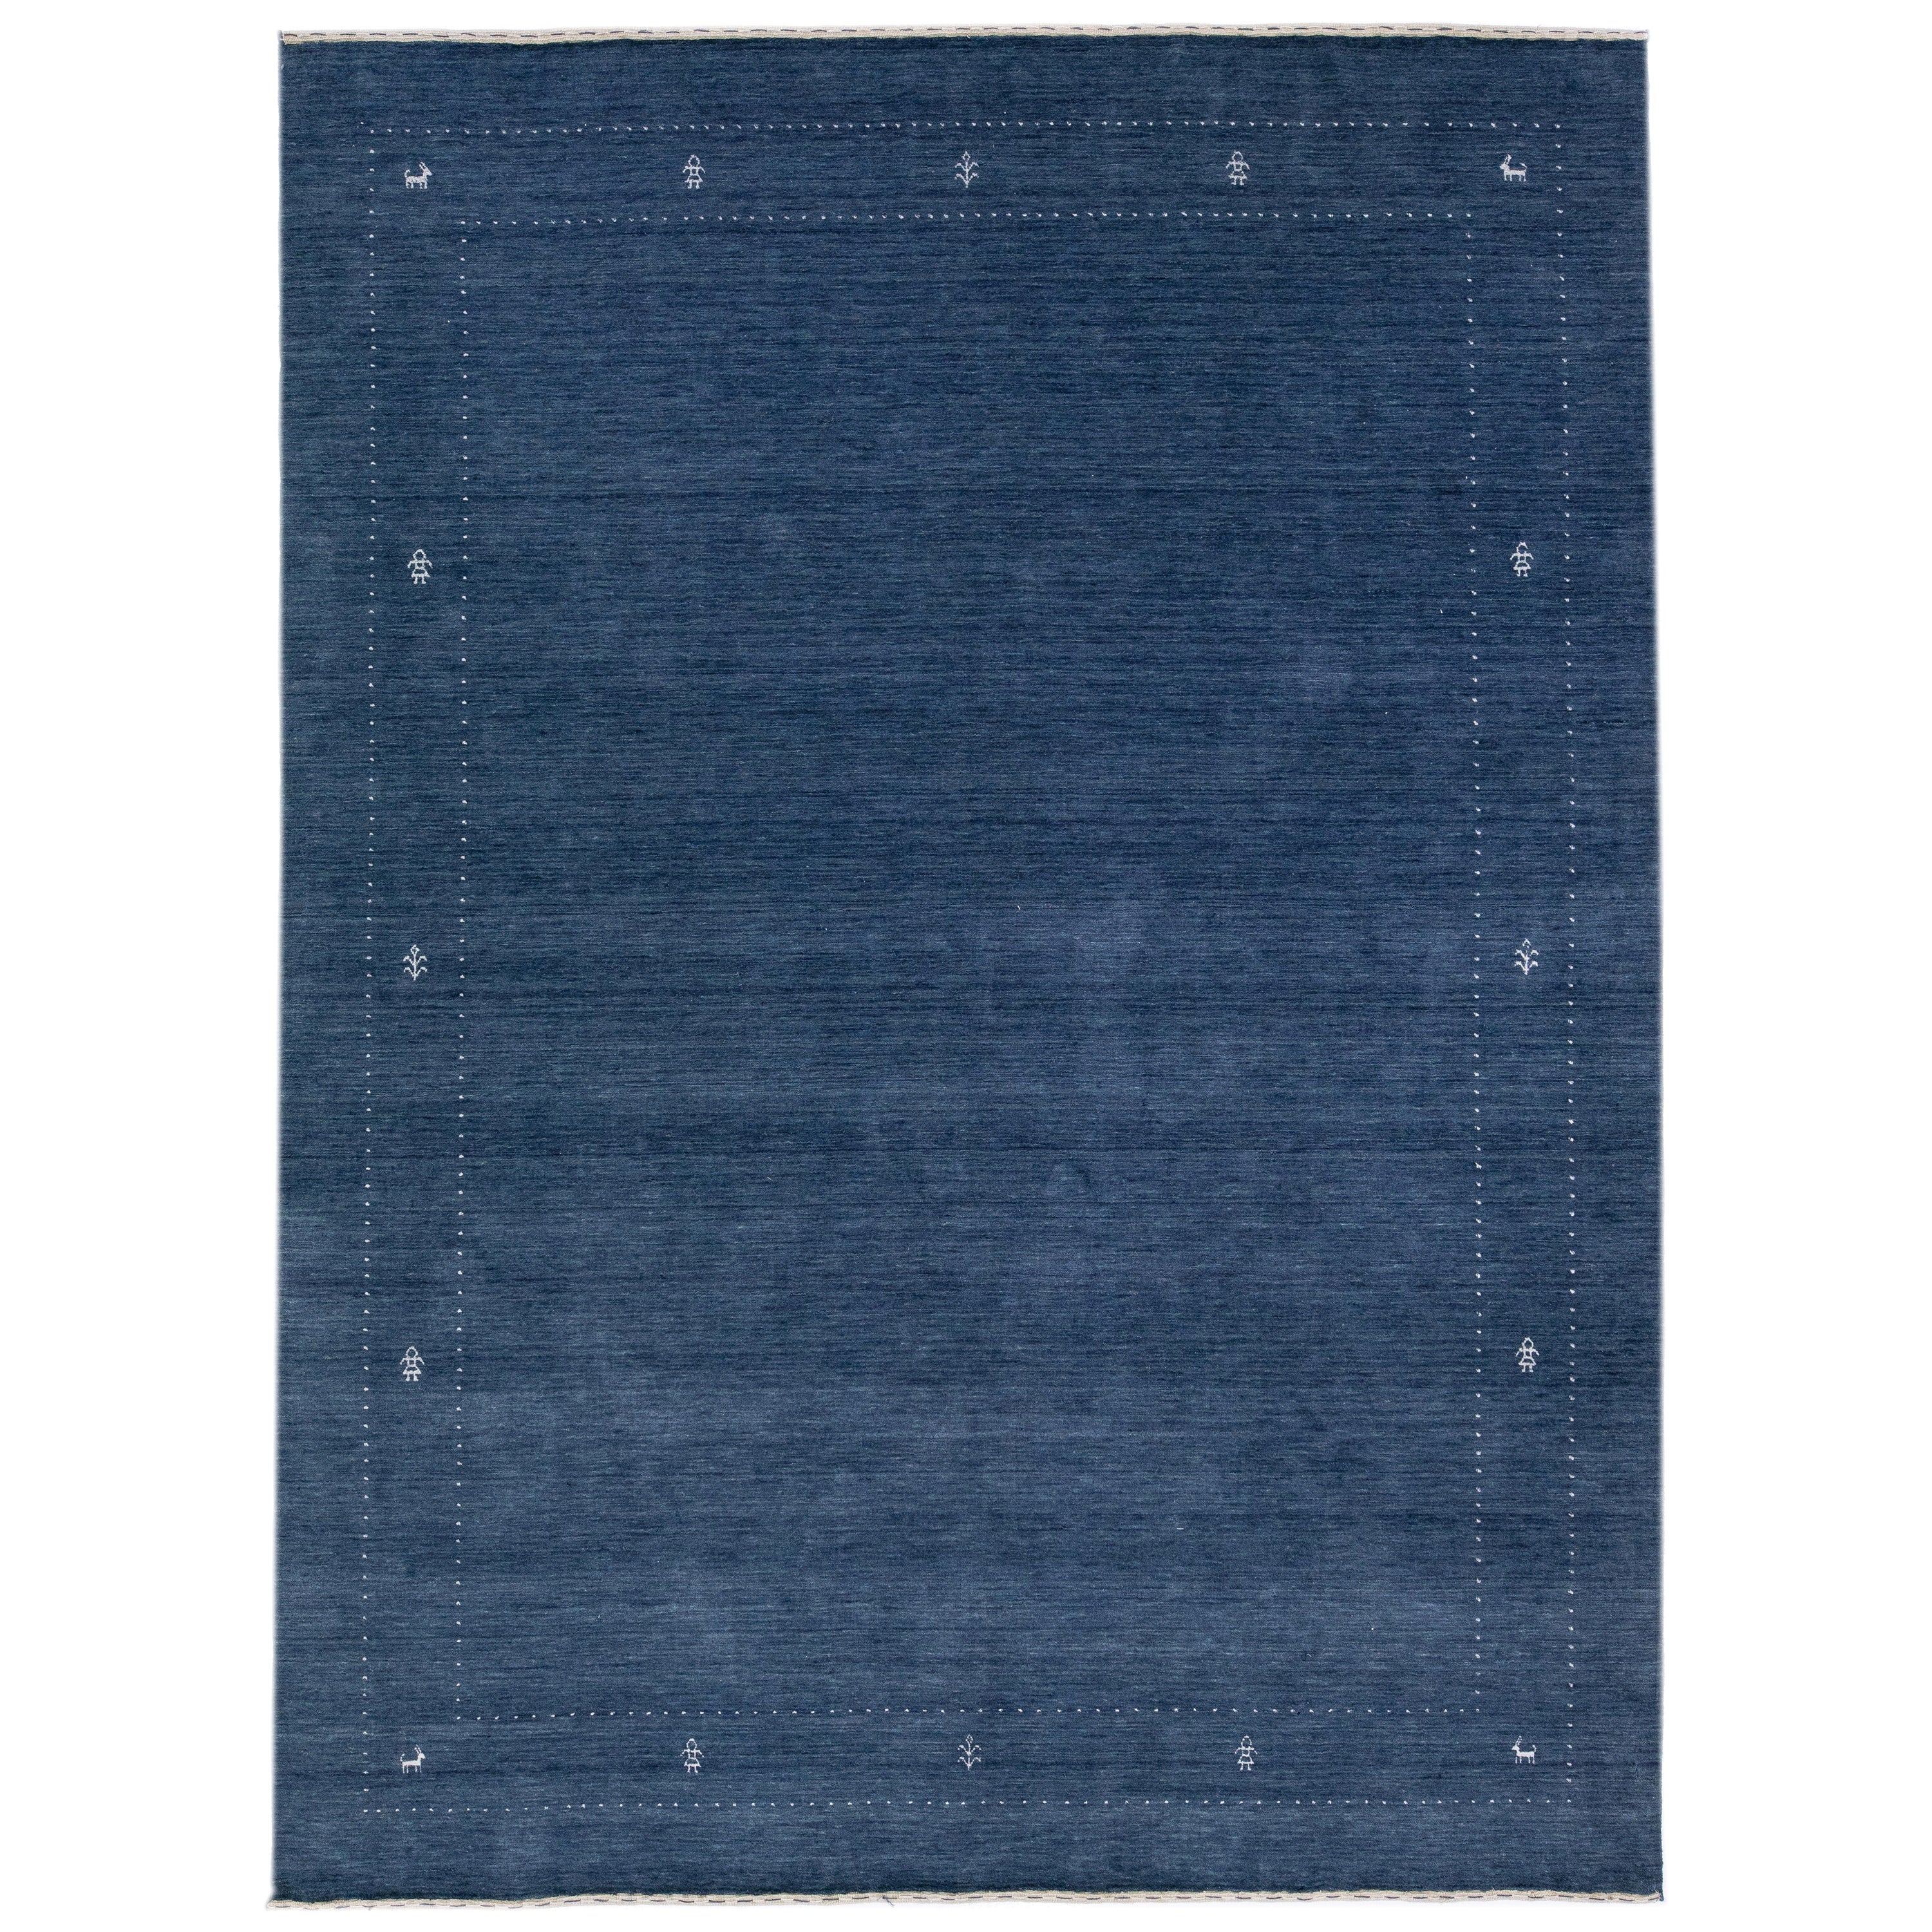  Handmade Modern Gabbeh Style Blue Wool Rug with Minimalist Motif